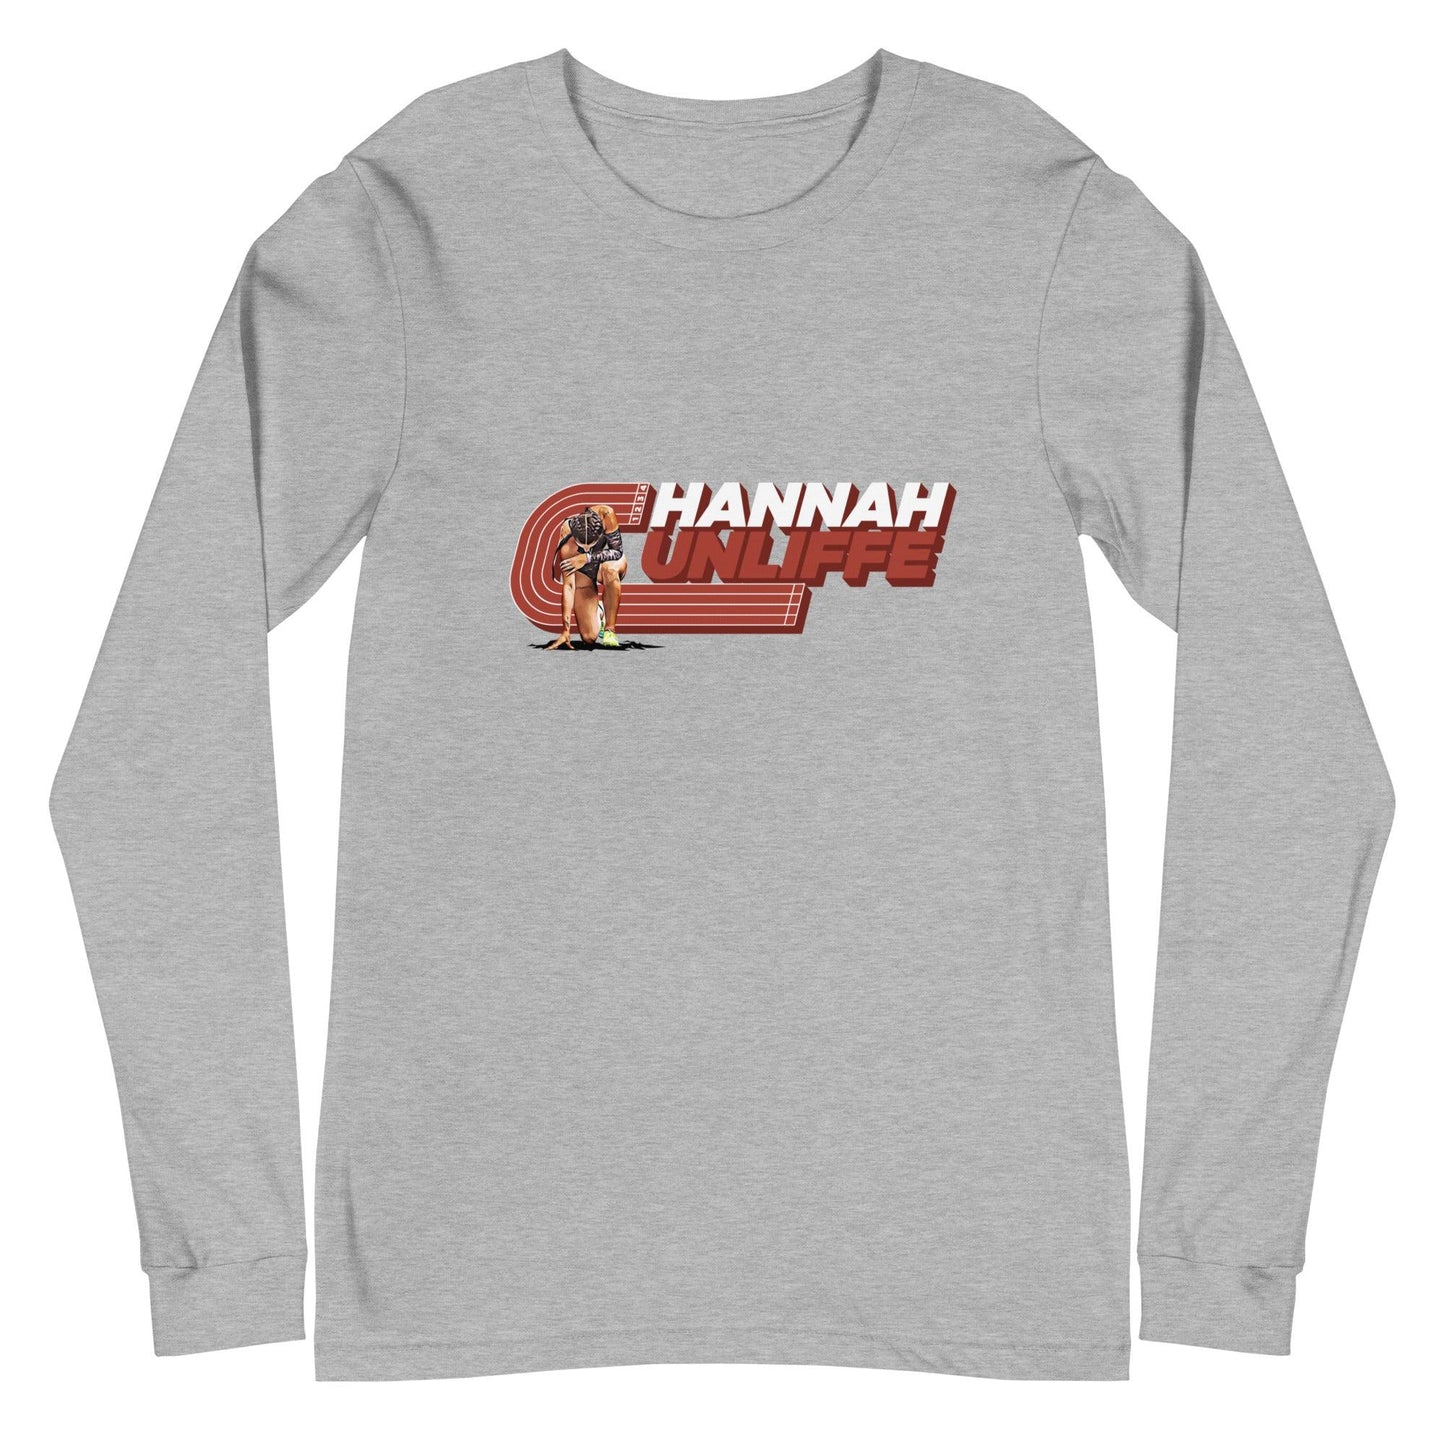 Hannah Cunliffe "Essential" Long Sleeve Tee - Fan Arch